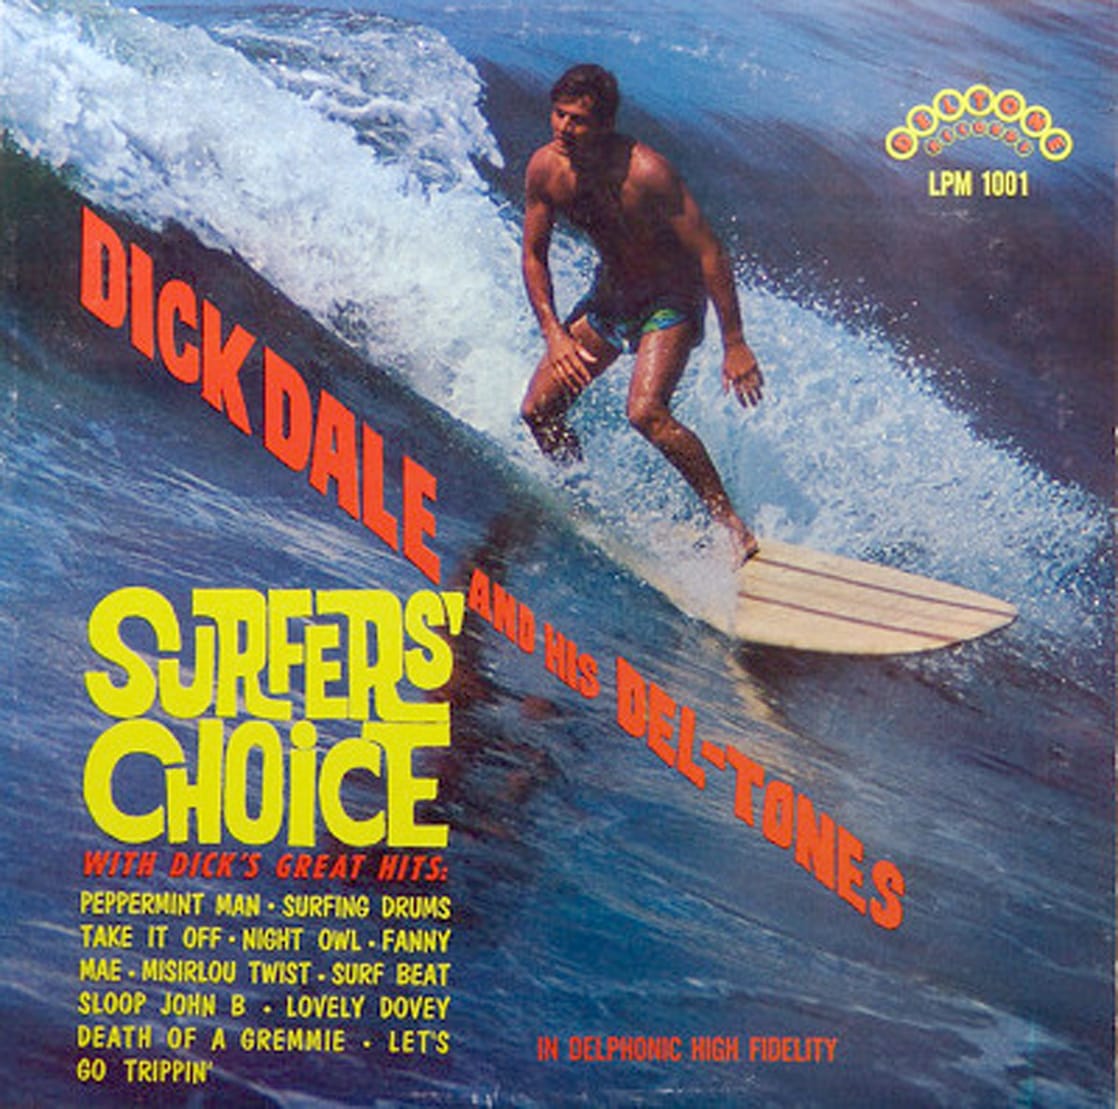 Surfer's Choice